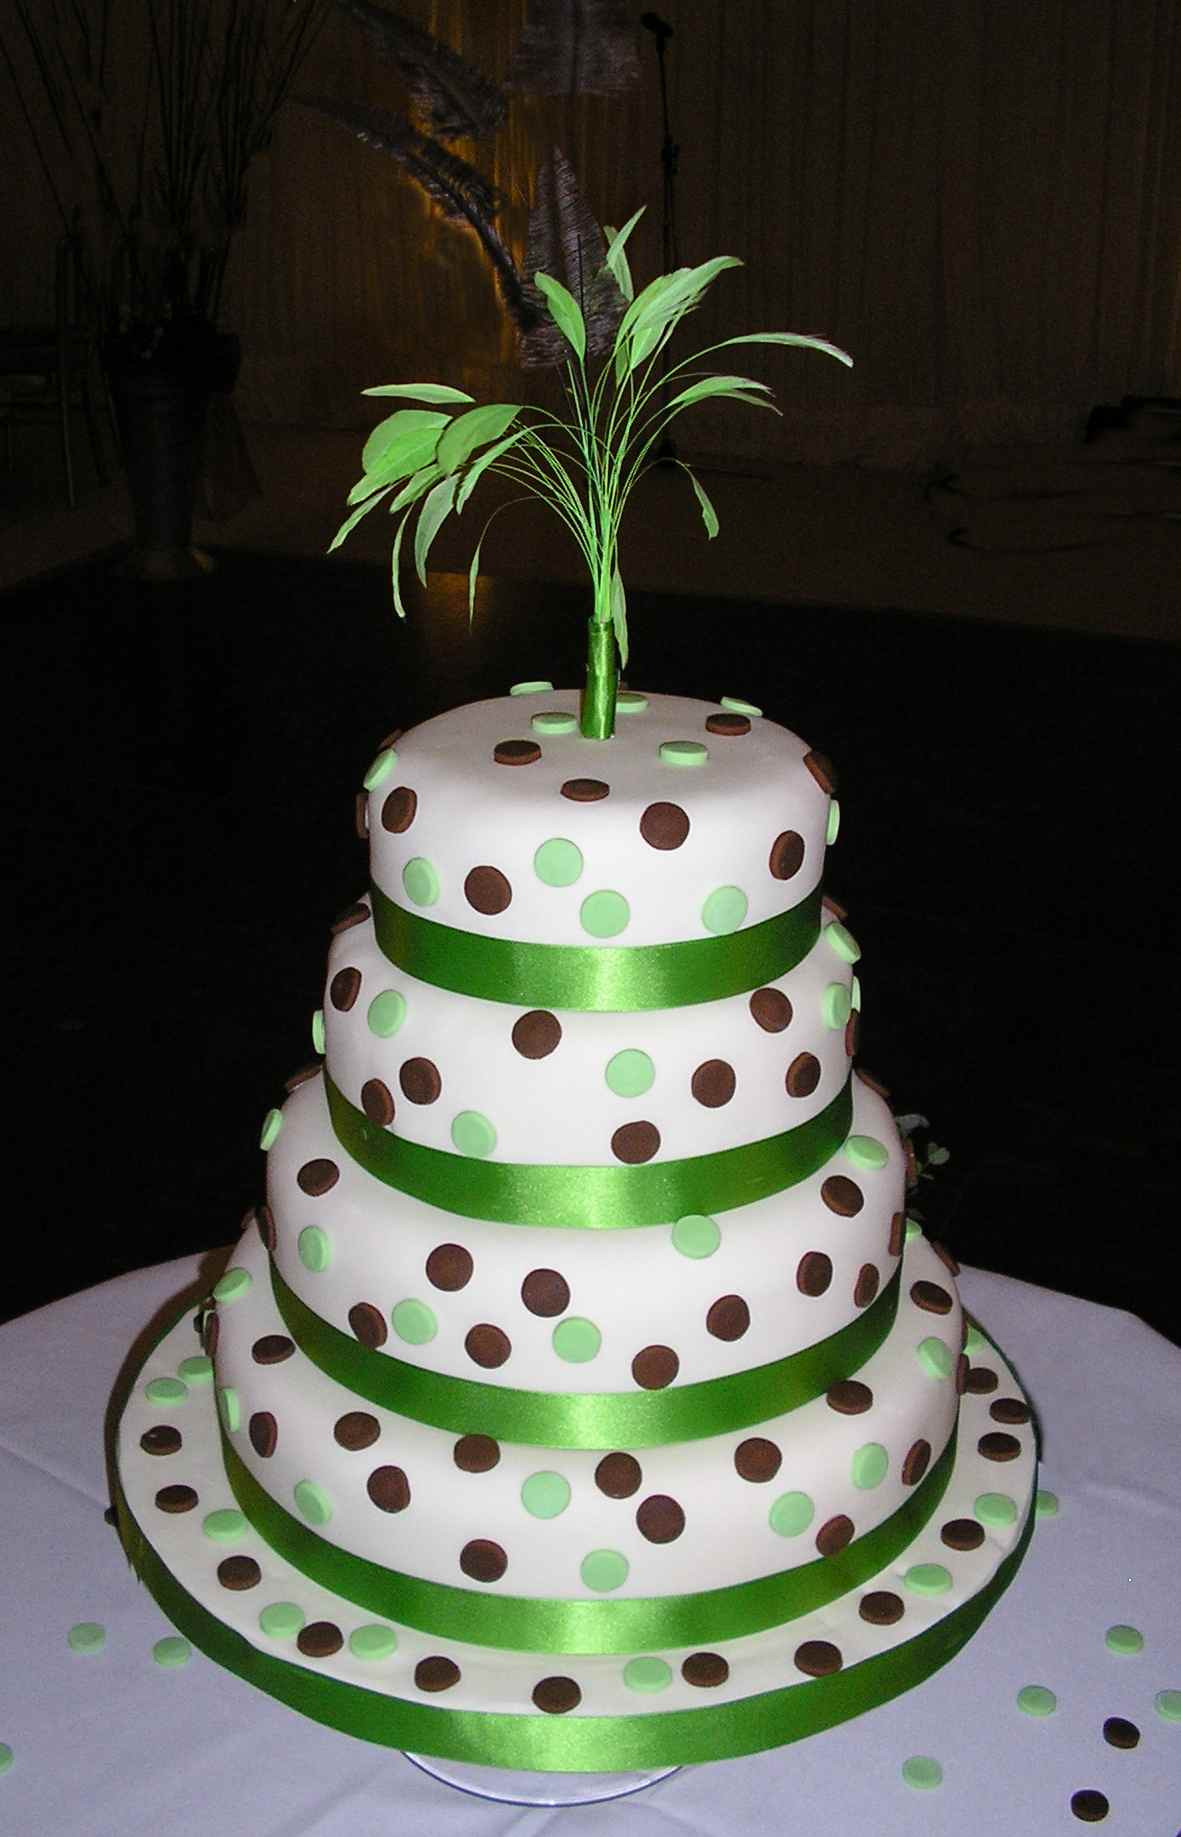 Poka Dot Wedding Cakes
 Polka Dot Cakes – Decoration Ideas